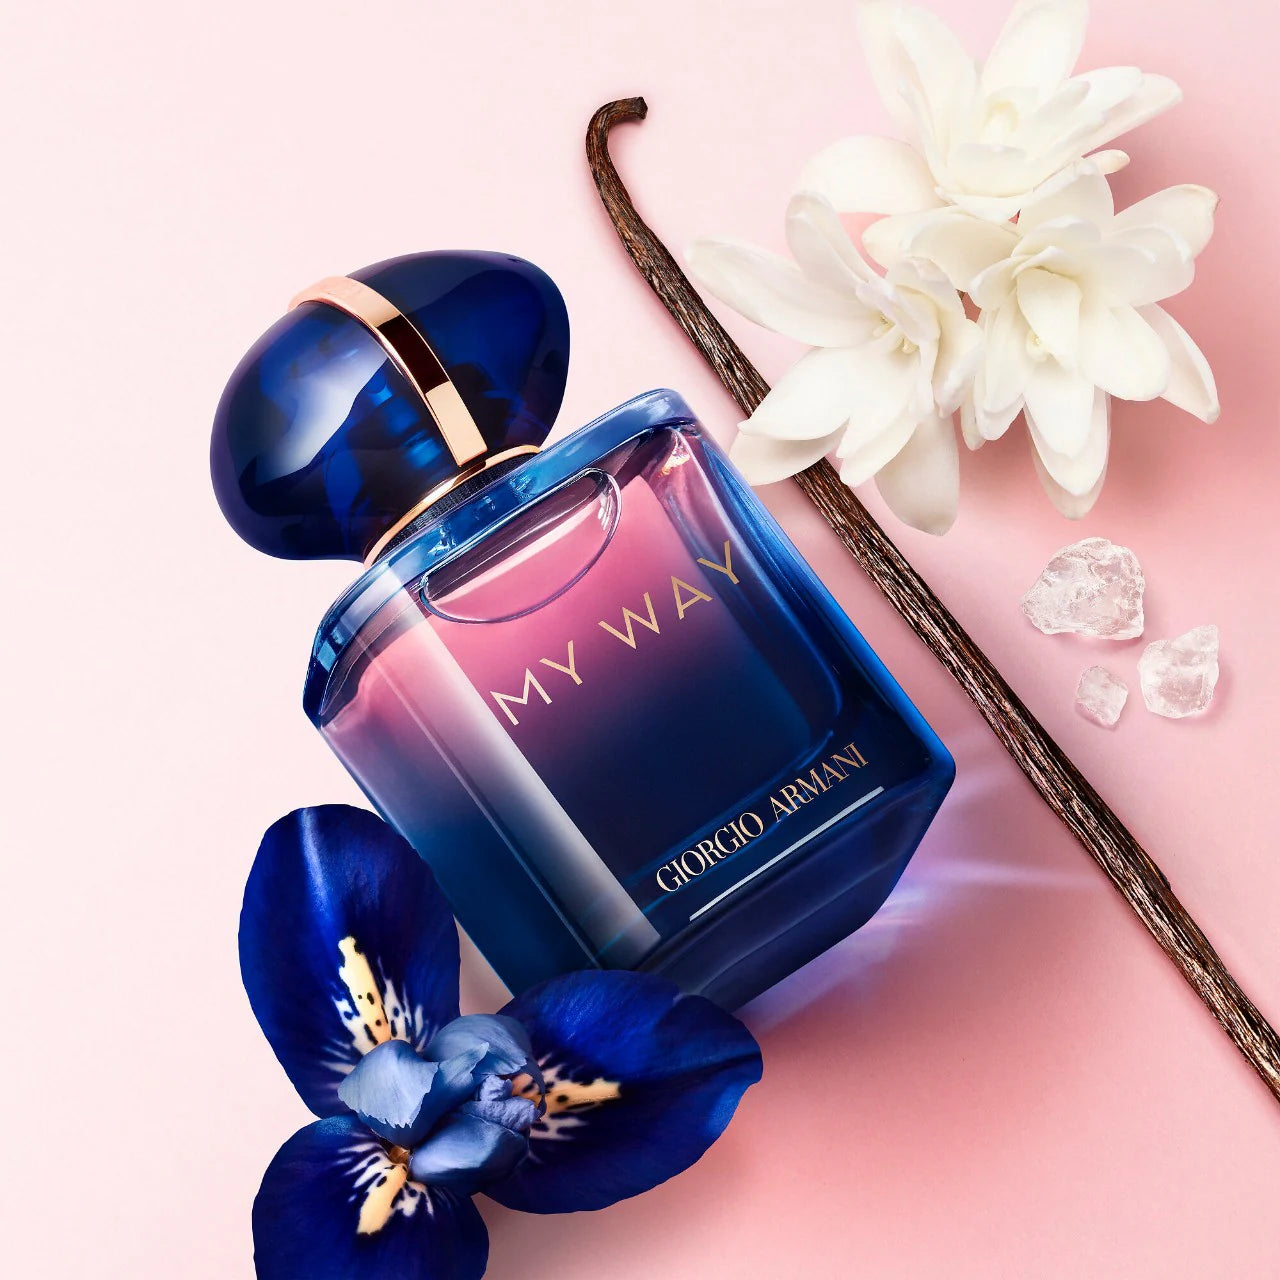 Armani My Way Parfum for Women - Perfume Planet 